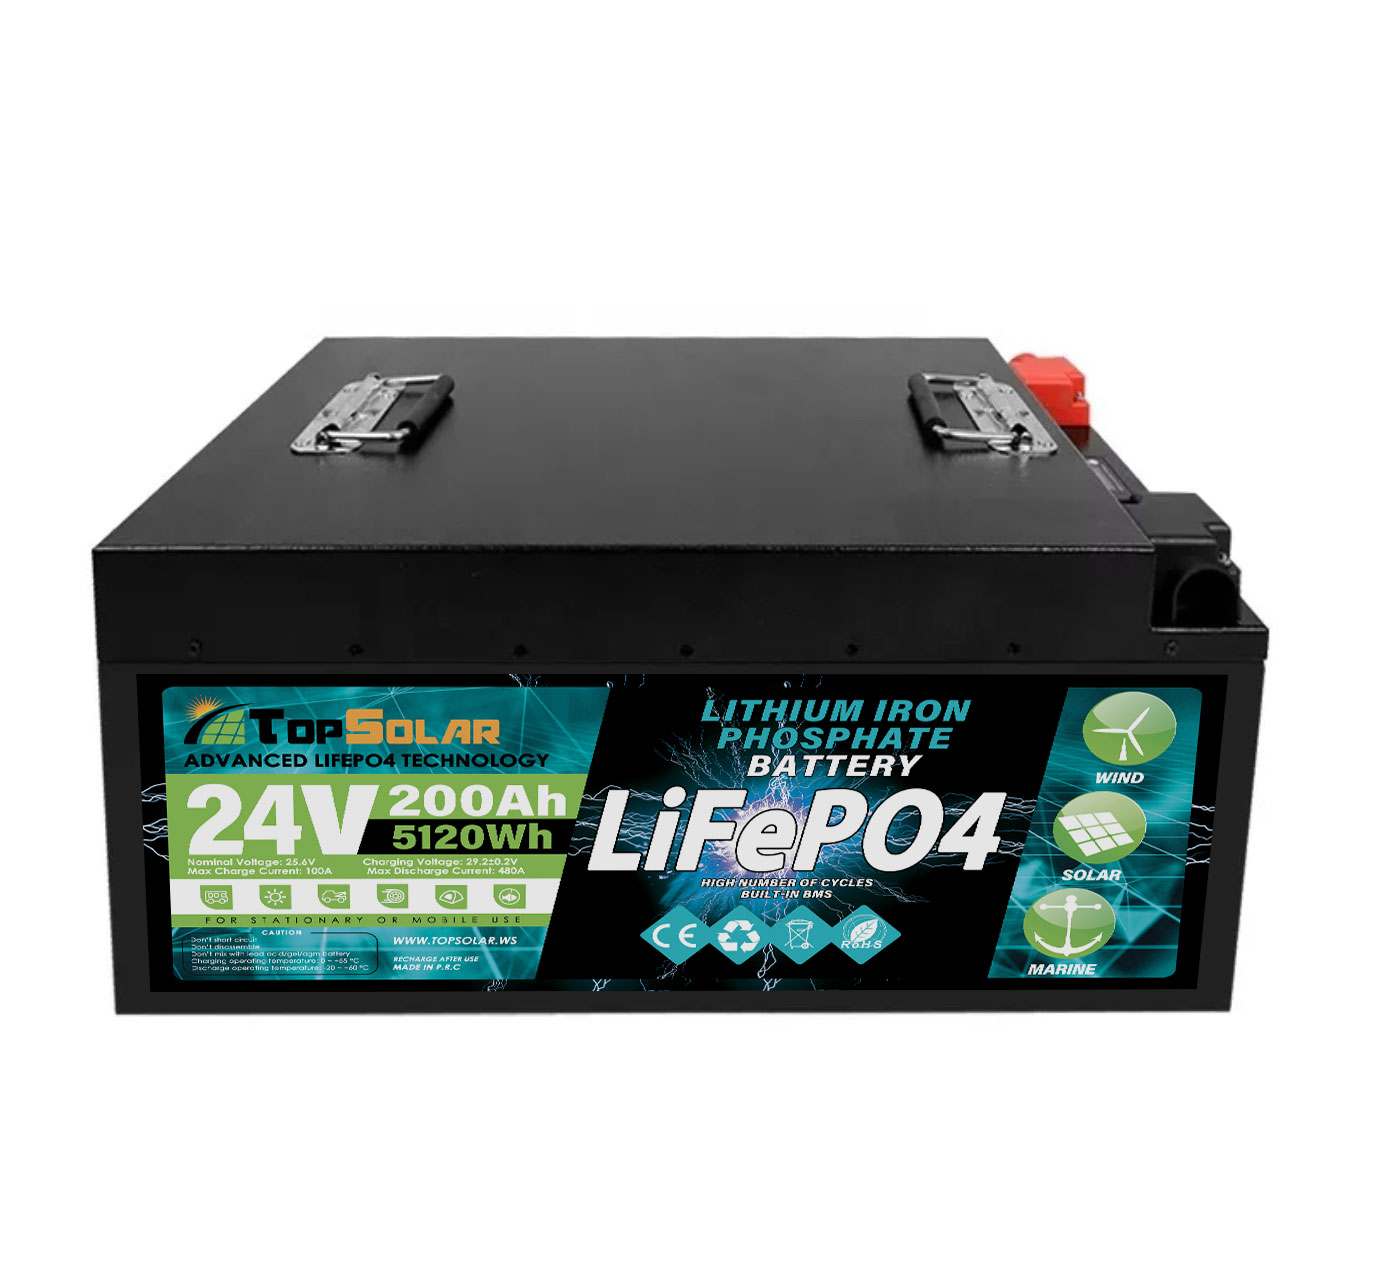 Batterie Ecowatt 100 Ah Lithium LiFePo4 à 4 000 cycles